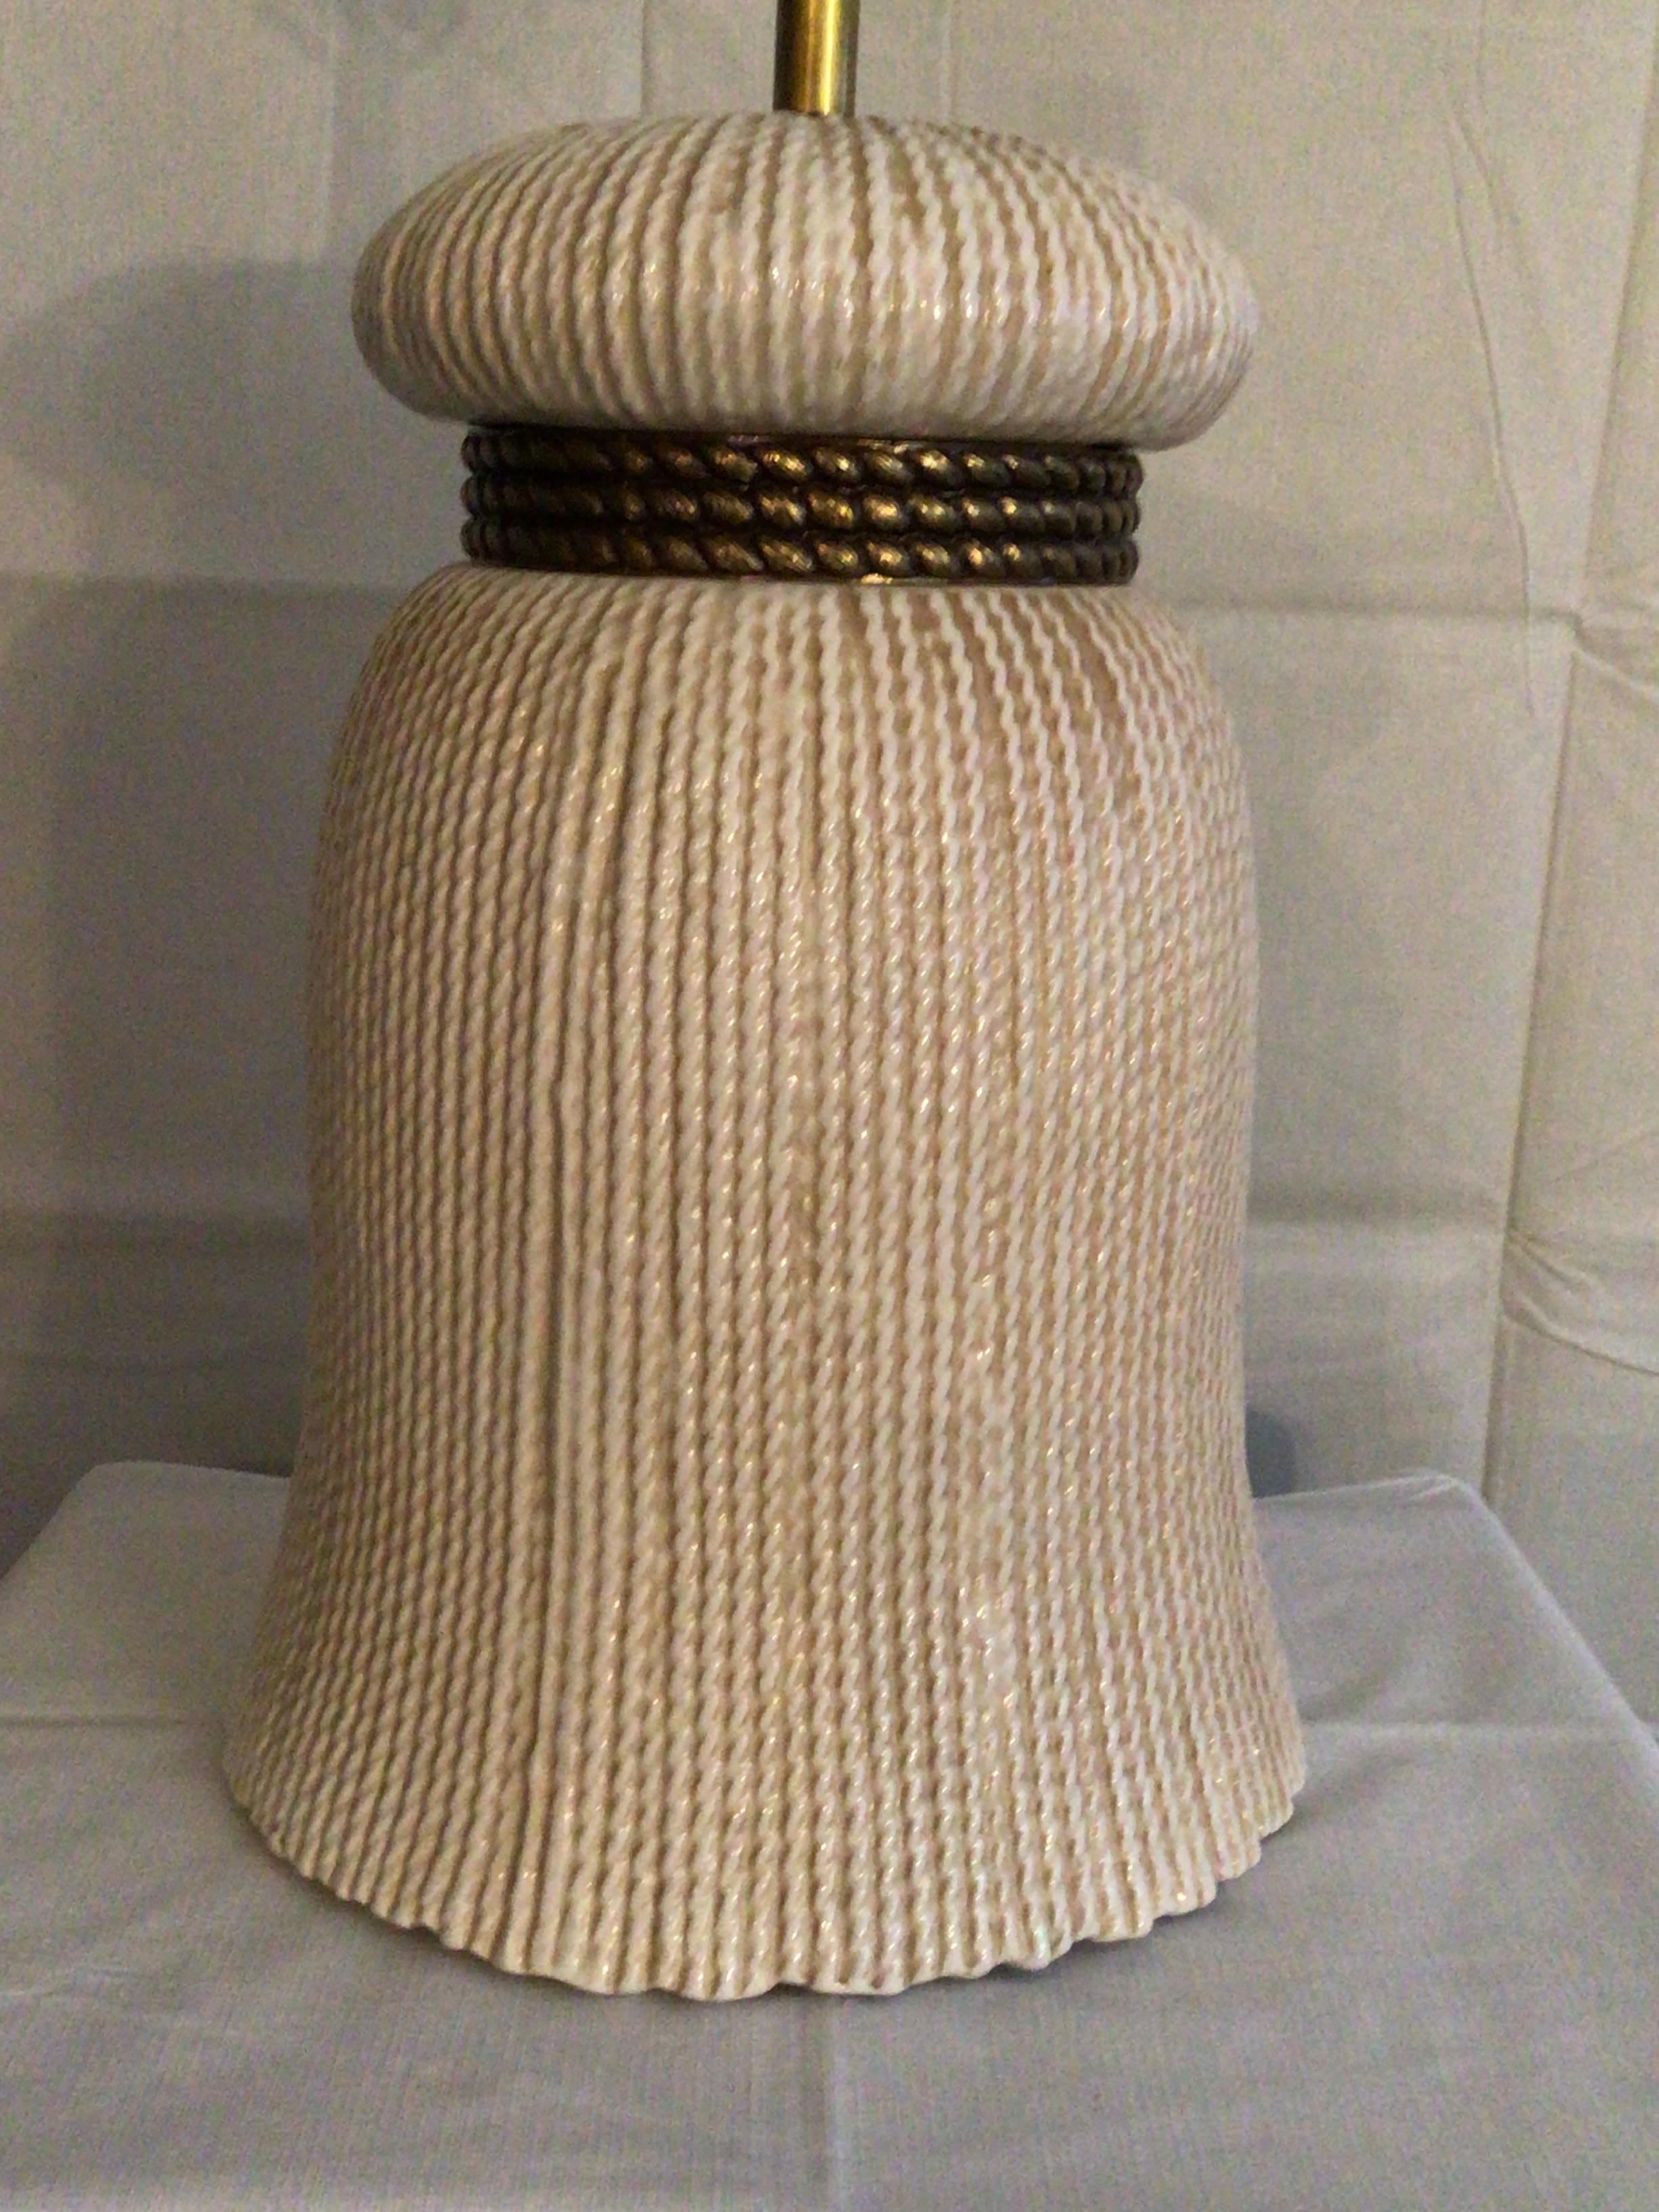 1960s ceramic tassel table lamp.